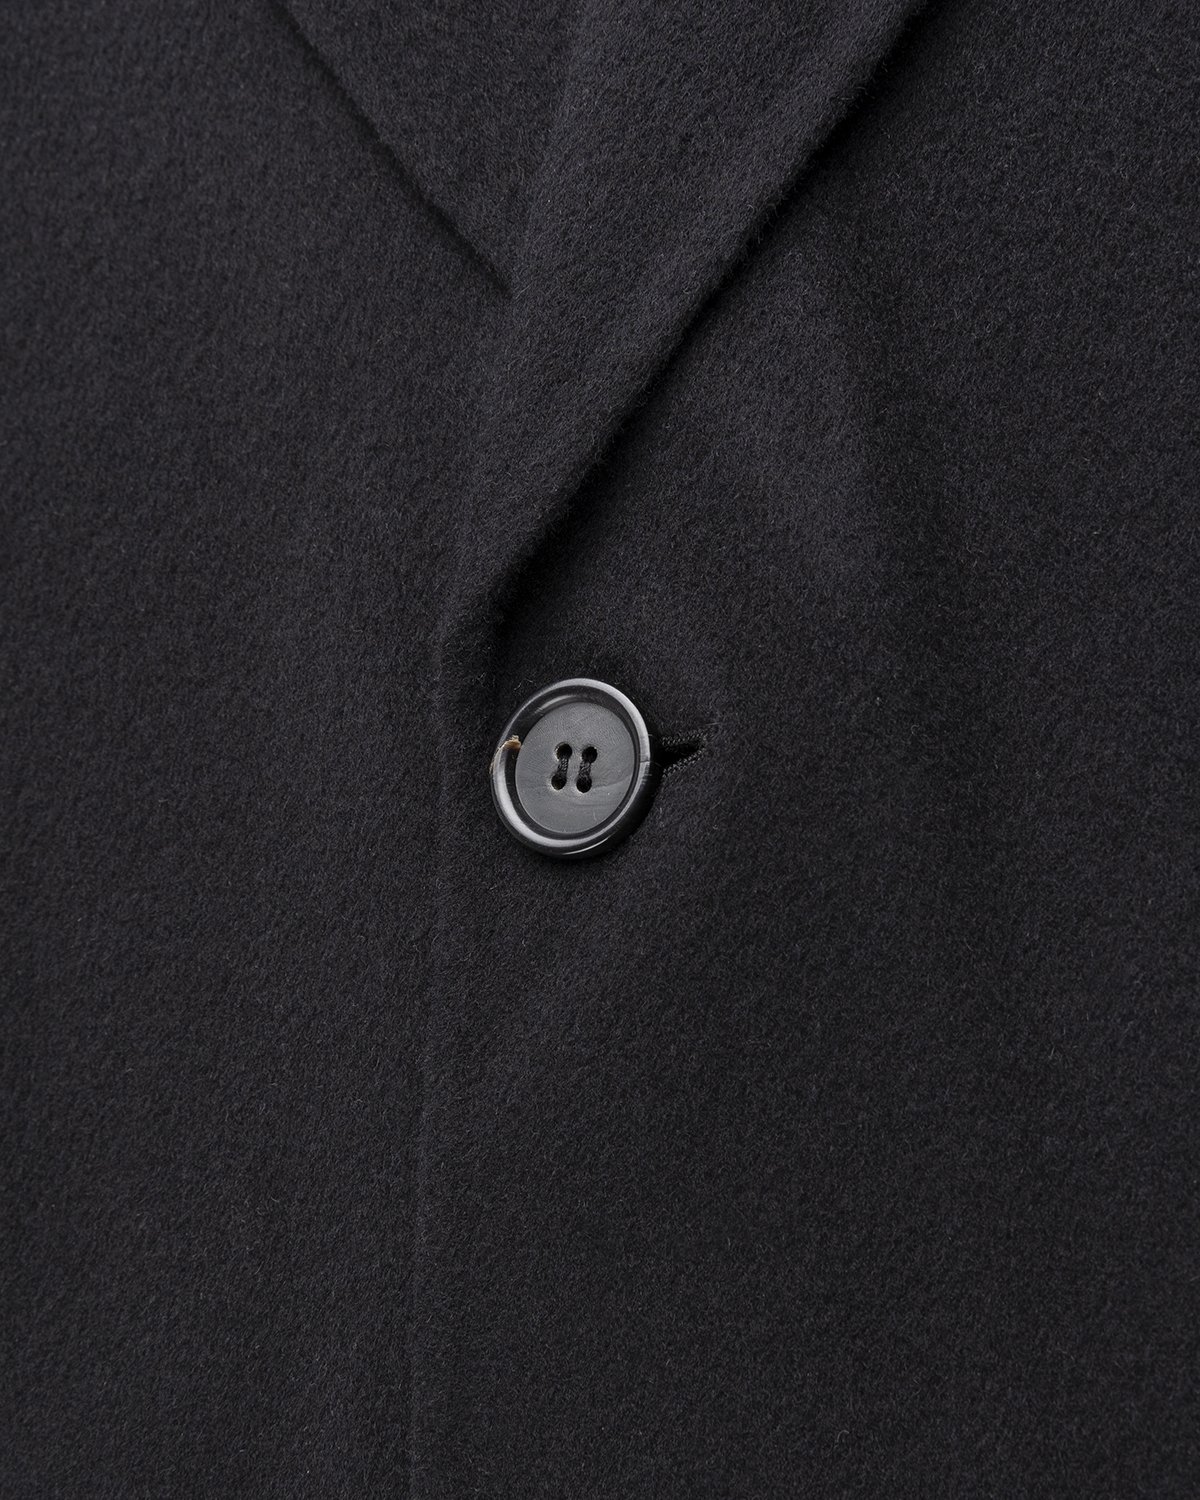 Acne Studios - Doubleface Coat Black - Clothing - Black - Image 4